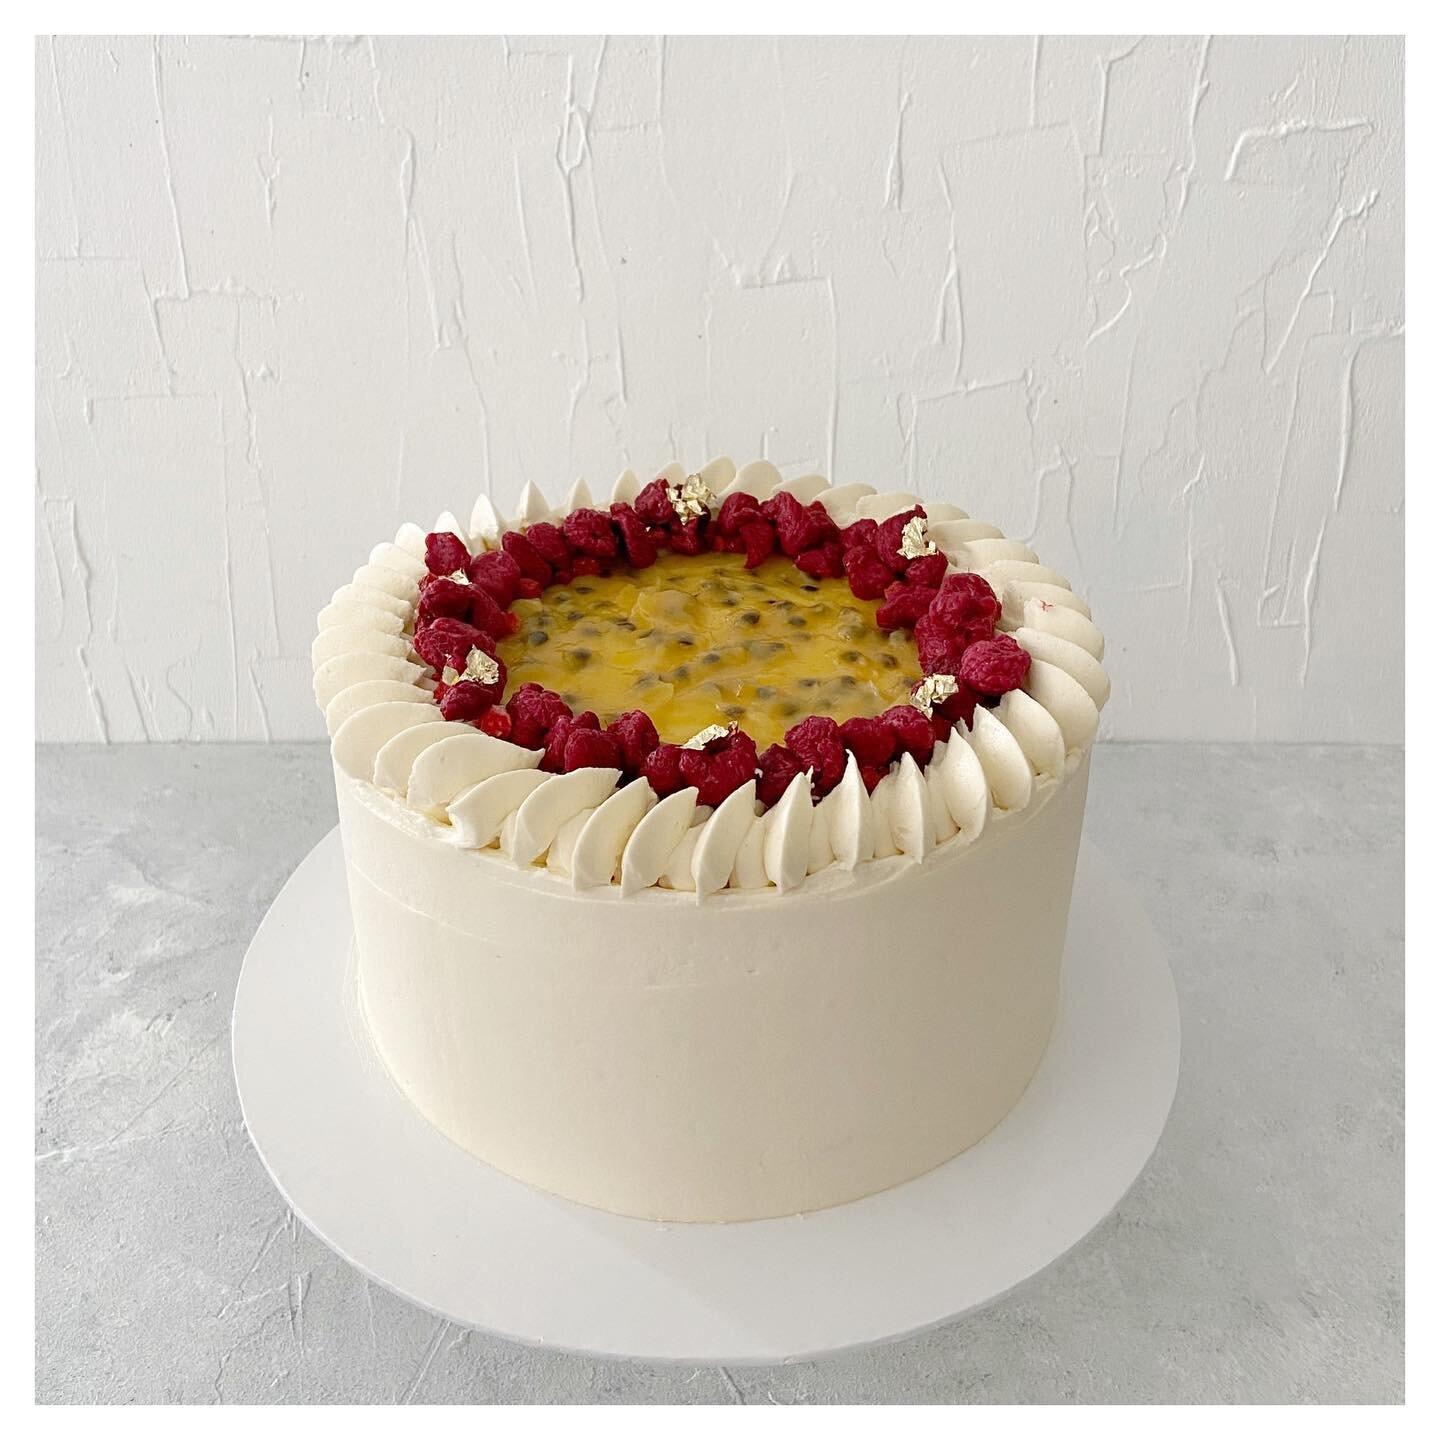 Vanilla Passion &amp; Raspberry cake filled with Passion curd and Raspberries ..!
.
.

#birthdaycakes #cakedesigner #sweets #cakeoftheday #baker #cakecakecake  #foodphotography #homebaker #customcakes #instafood #instacake